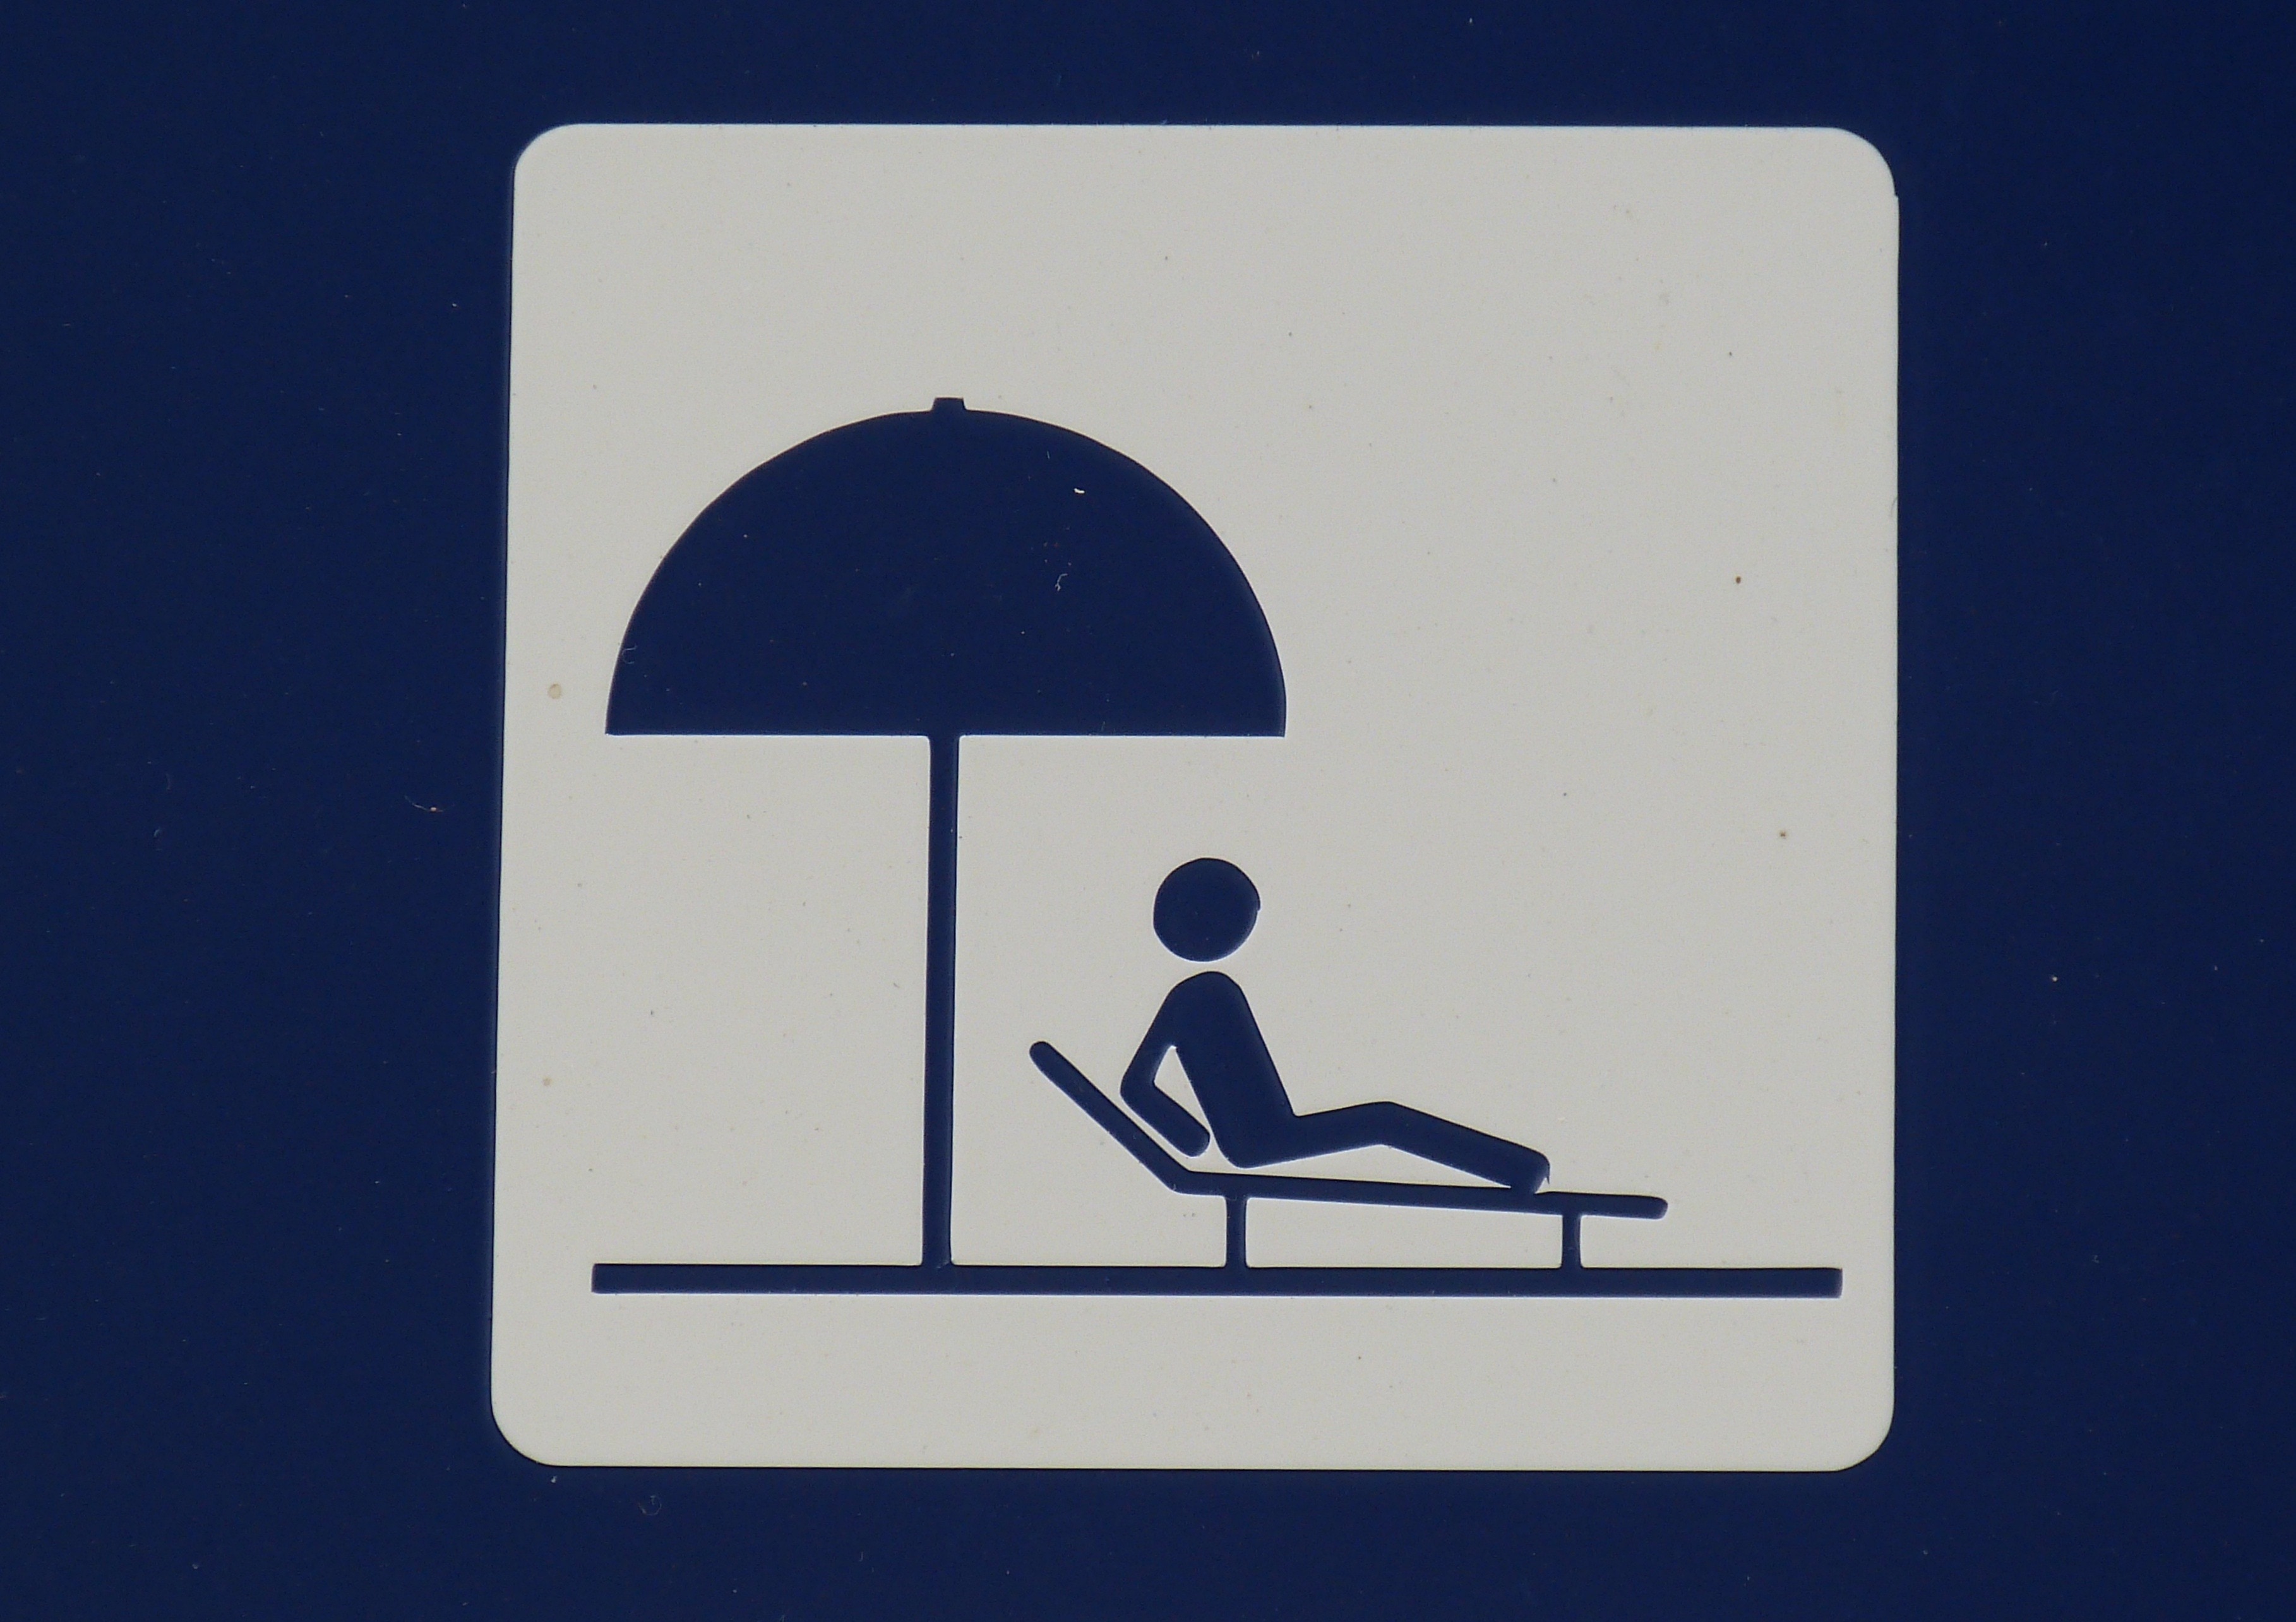 man figure on lounger under umbrella illustration